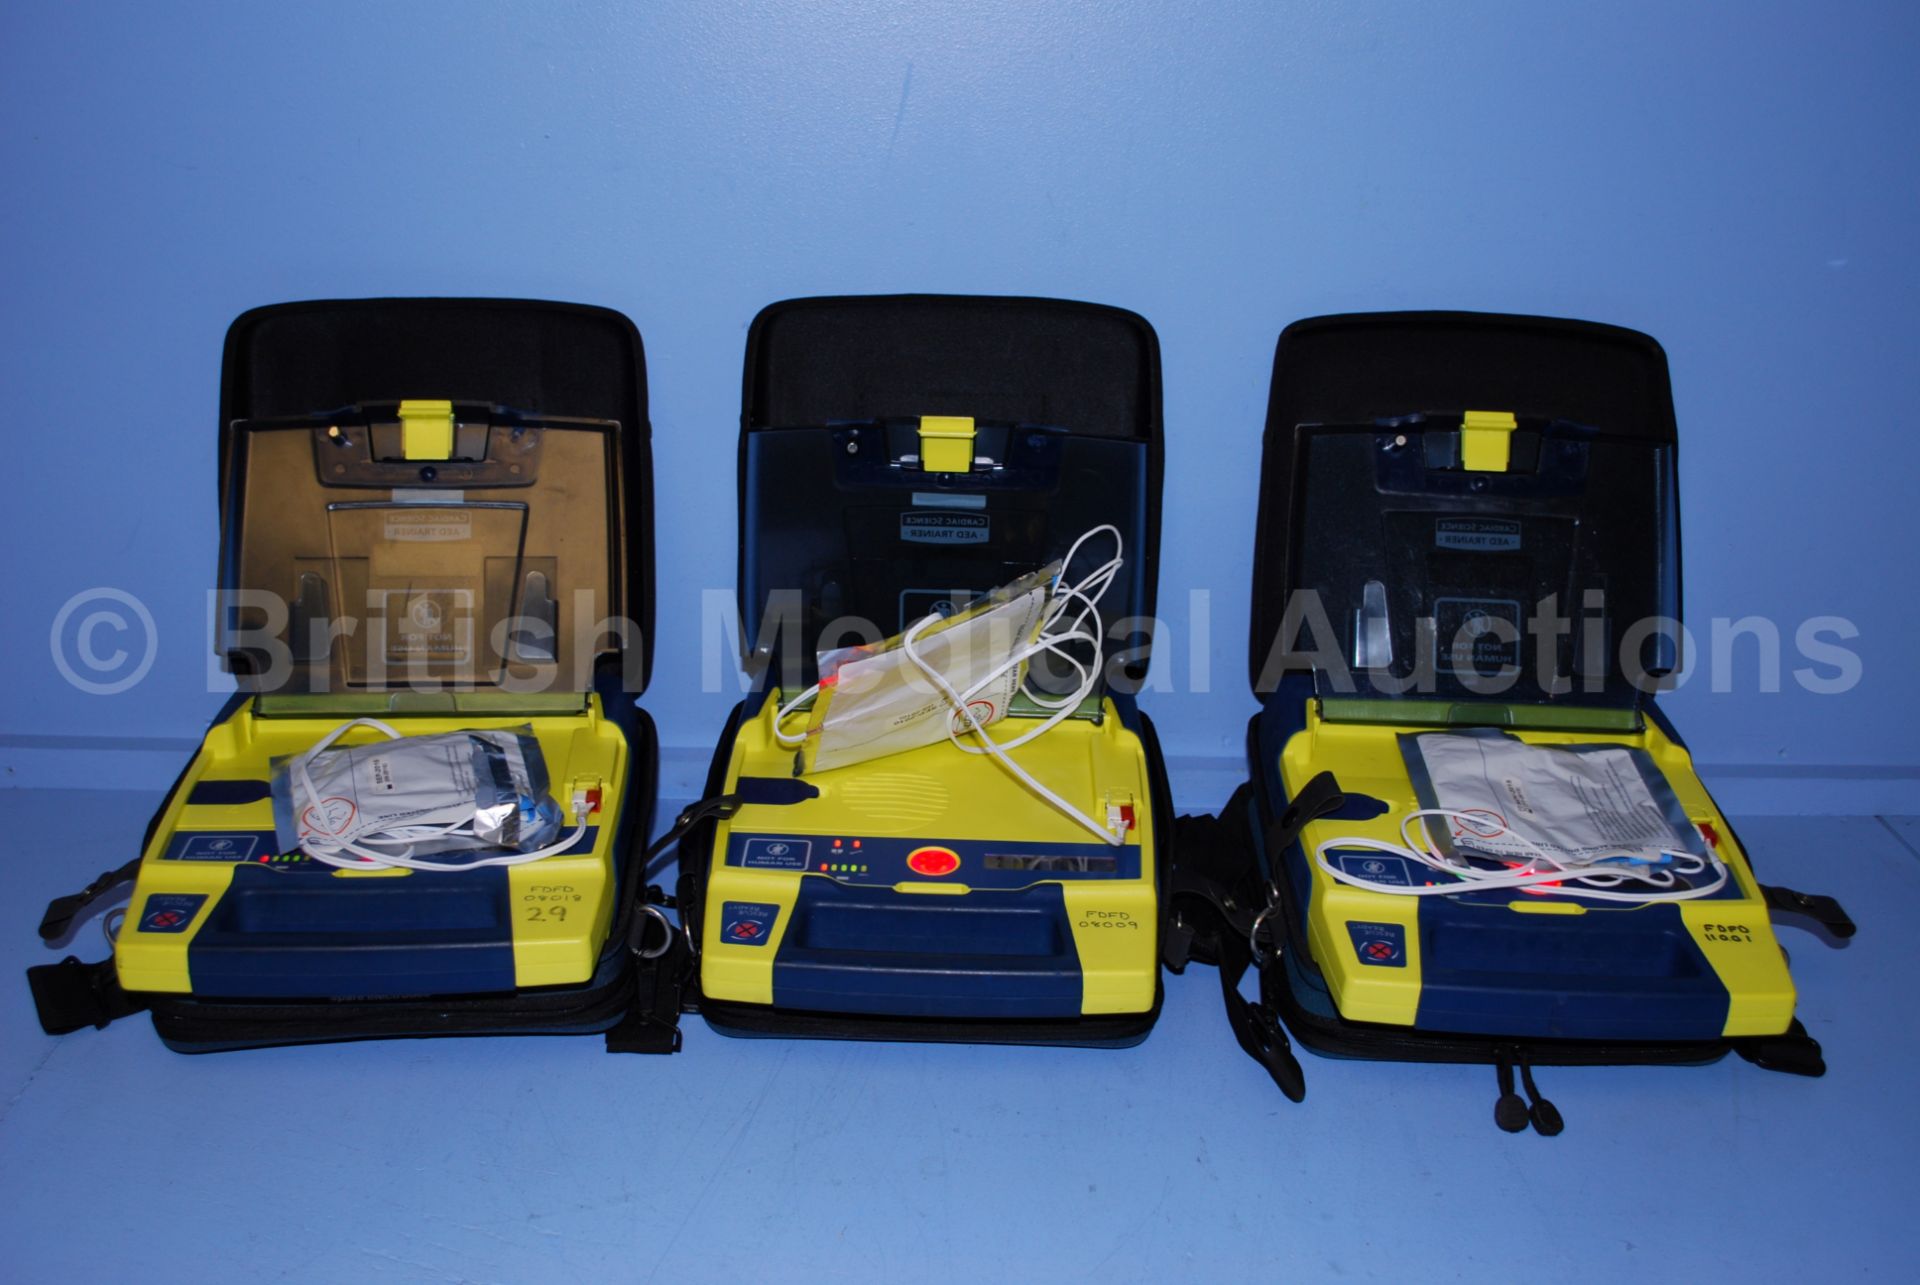 3 x Cardiac Science AED Trainer Defibrillators wit - Image 2 of 2